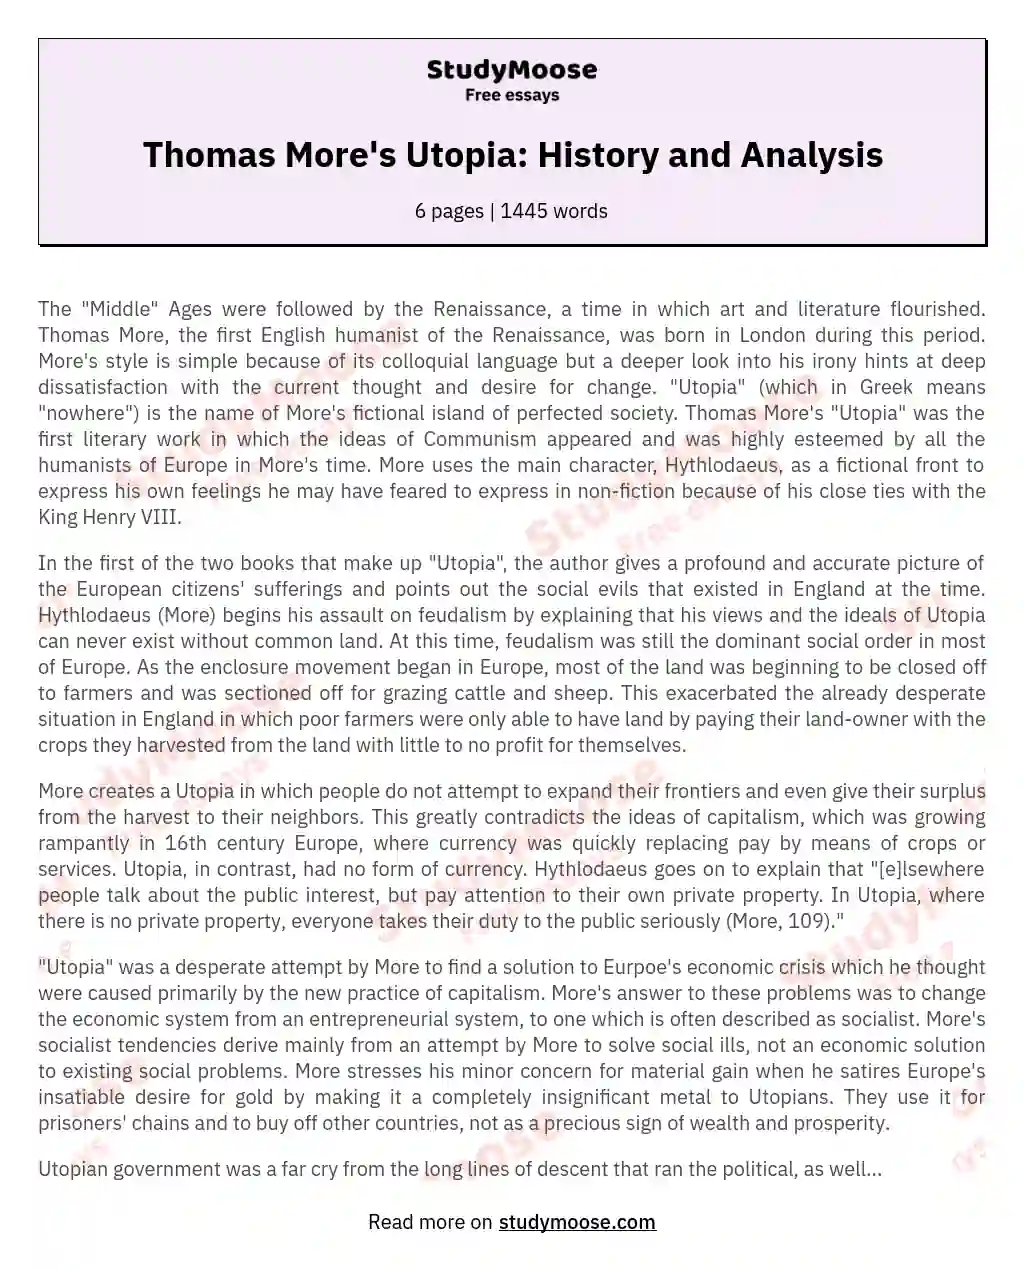 Thomas More's Utopia: History and Analysis essay